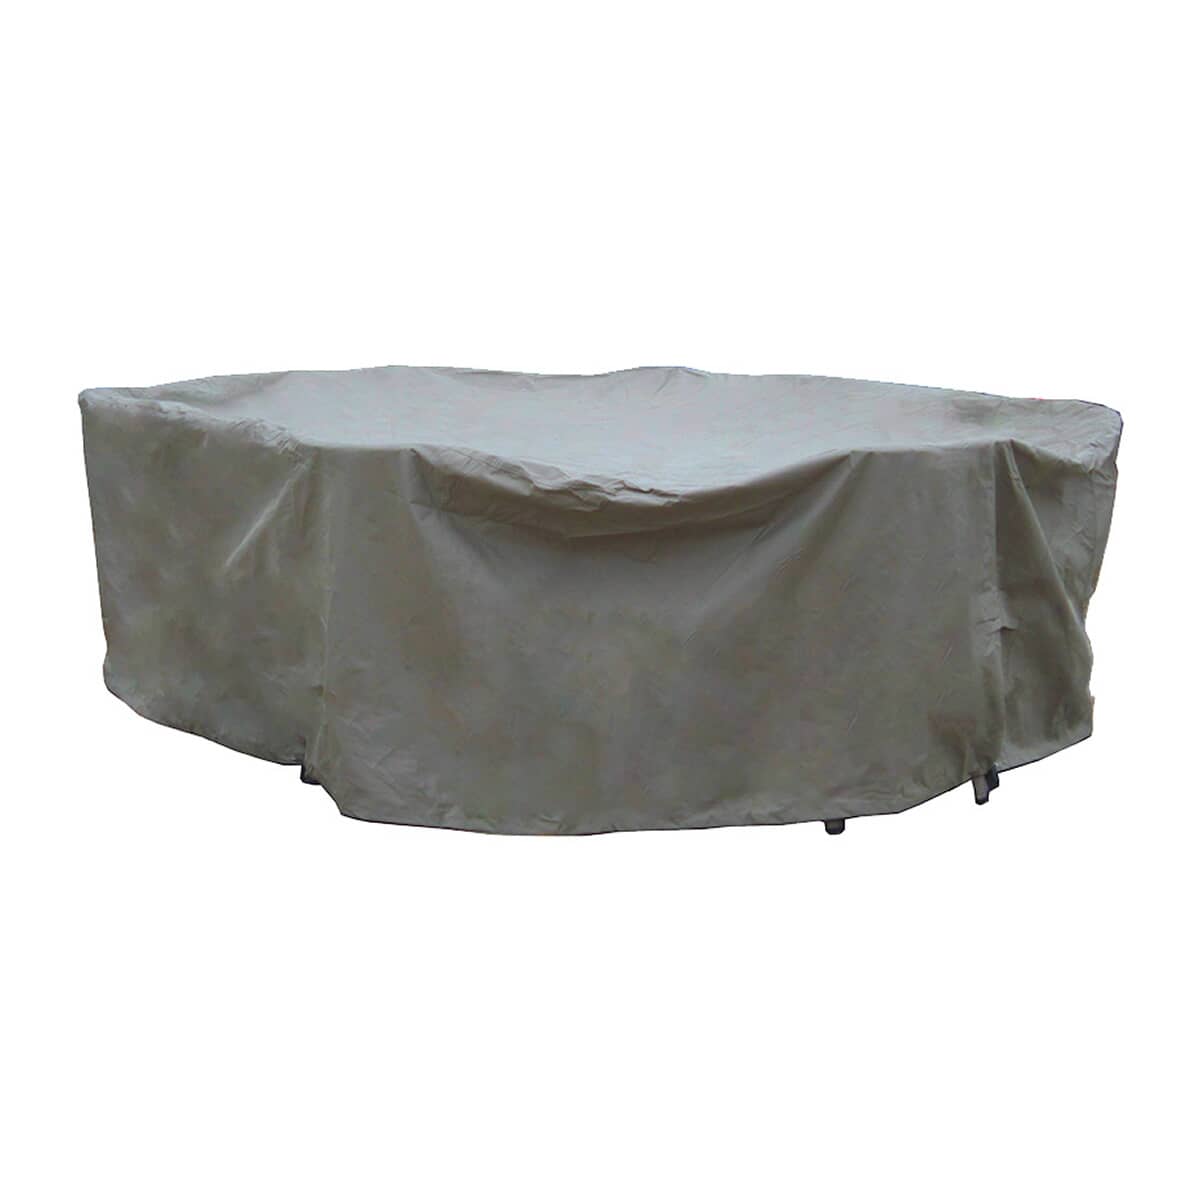 Bramblecrest 250 x 175cm Elliptical Table Set Cover - Khaki